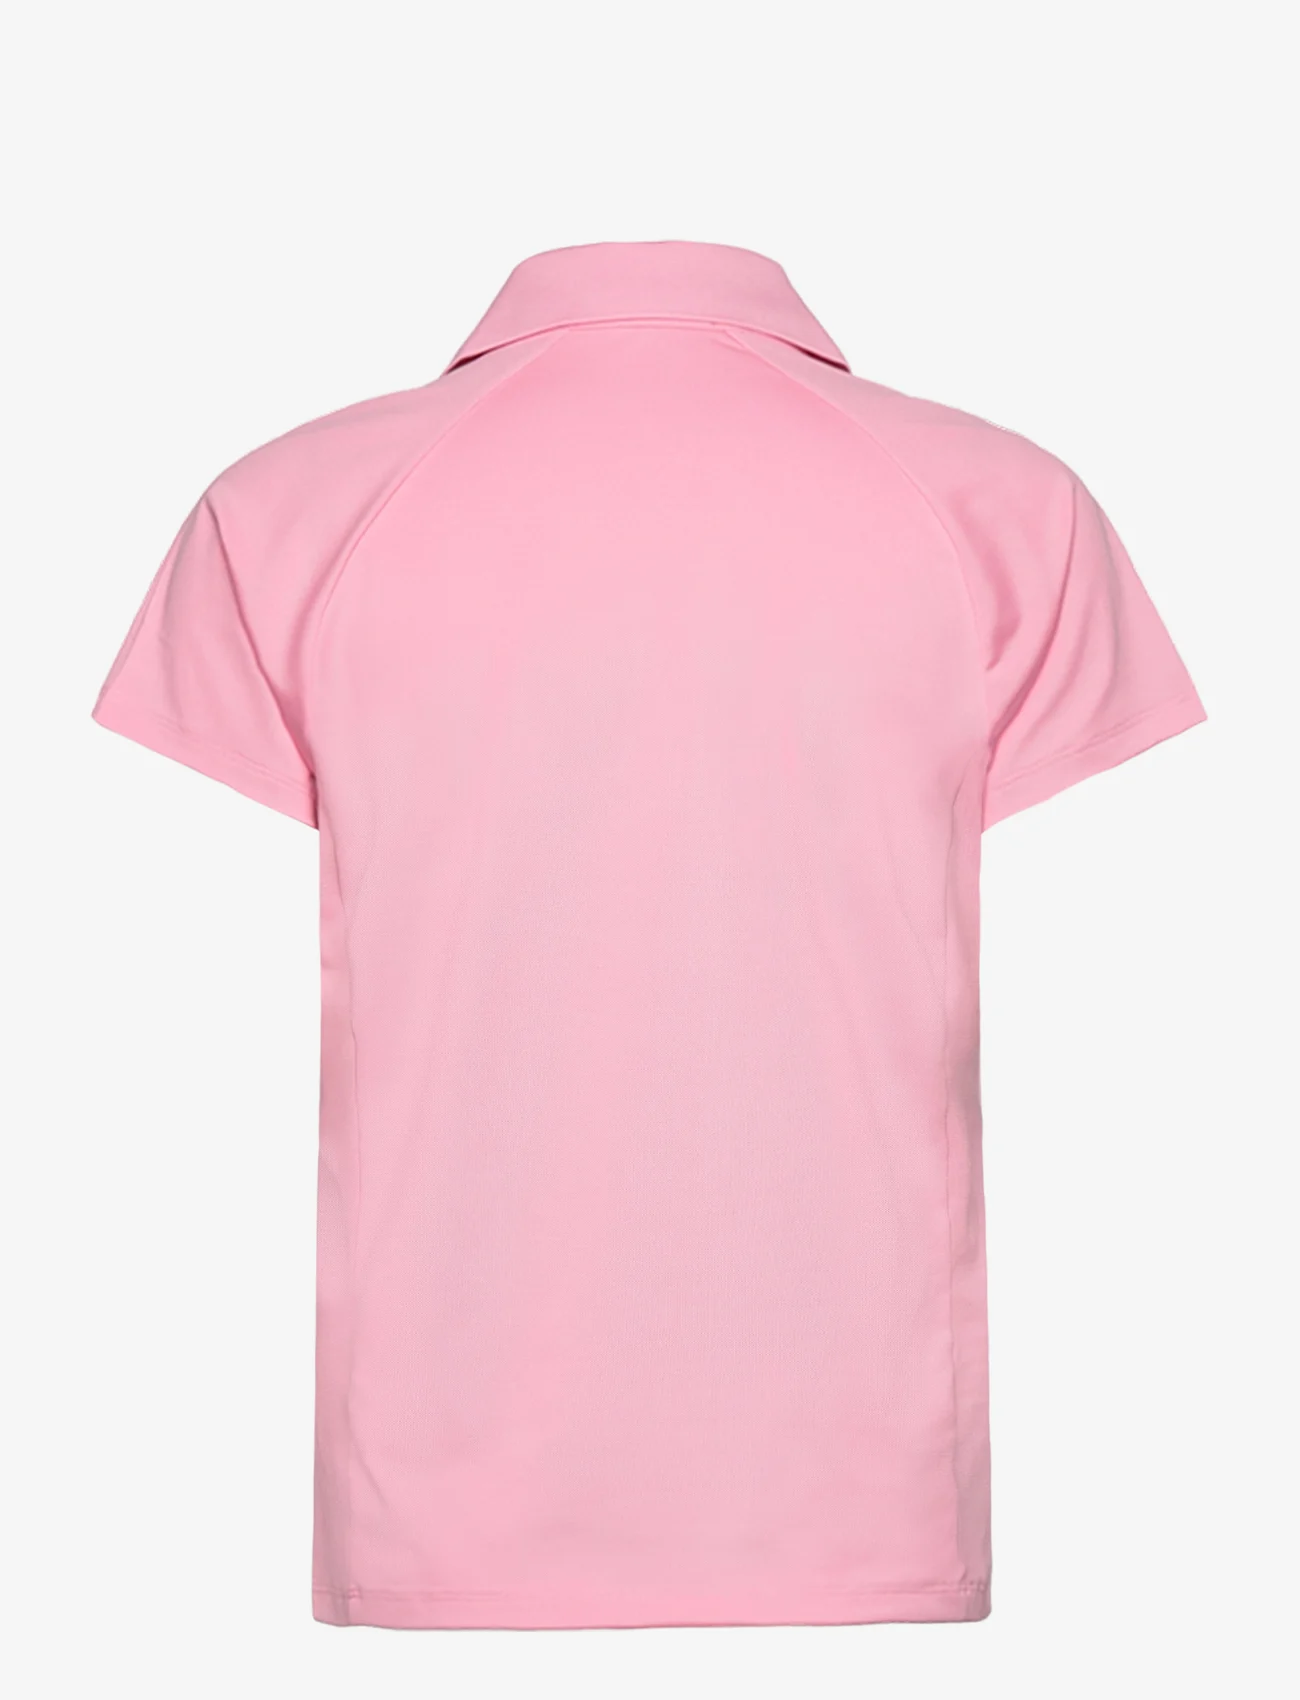 Ralph Lauren Golf - Tailored Fit Mesh Polo Shirt - polo krekli - course pink - 1